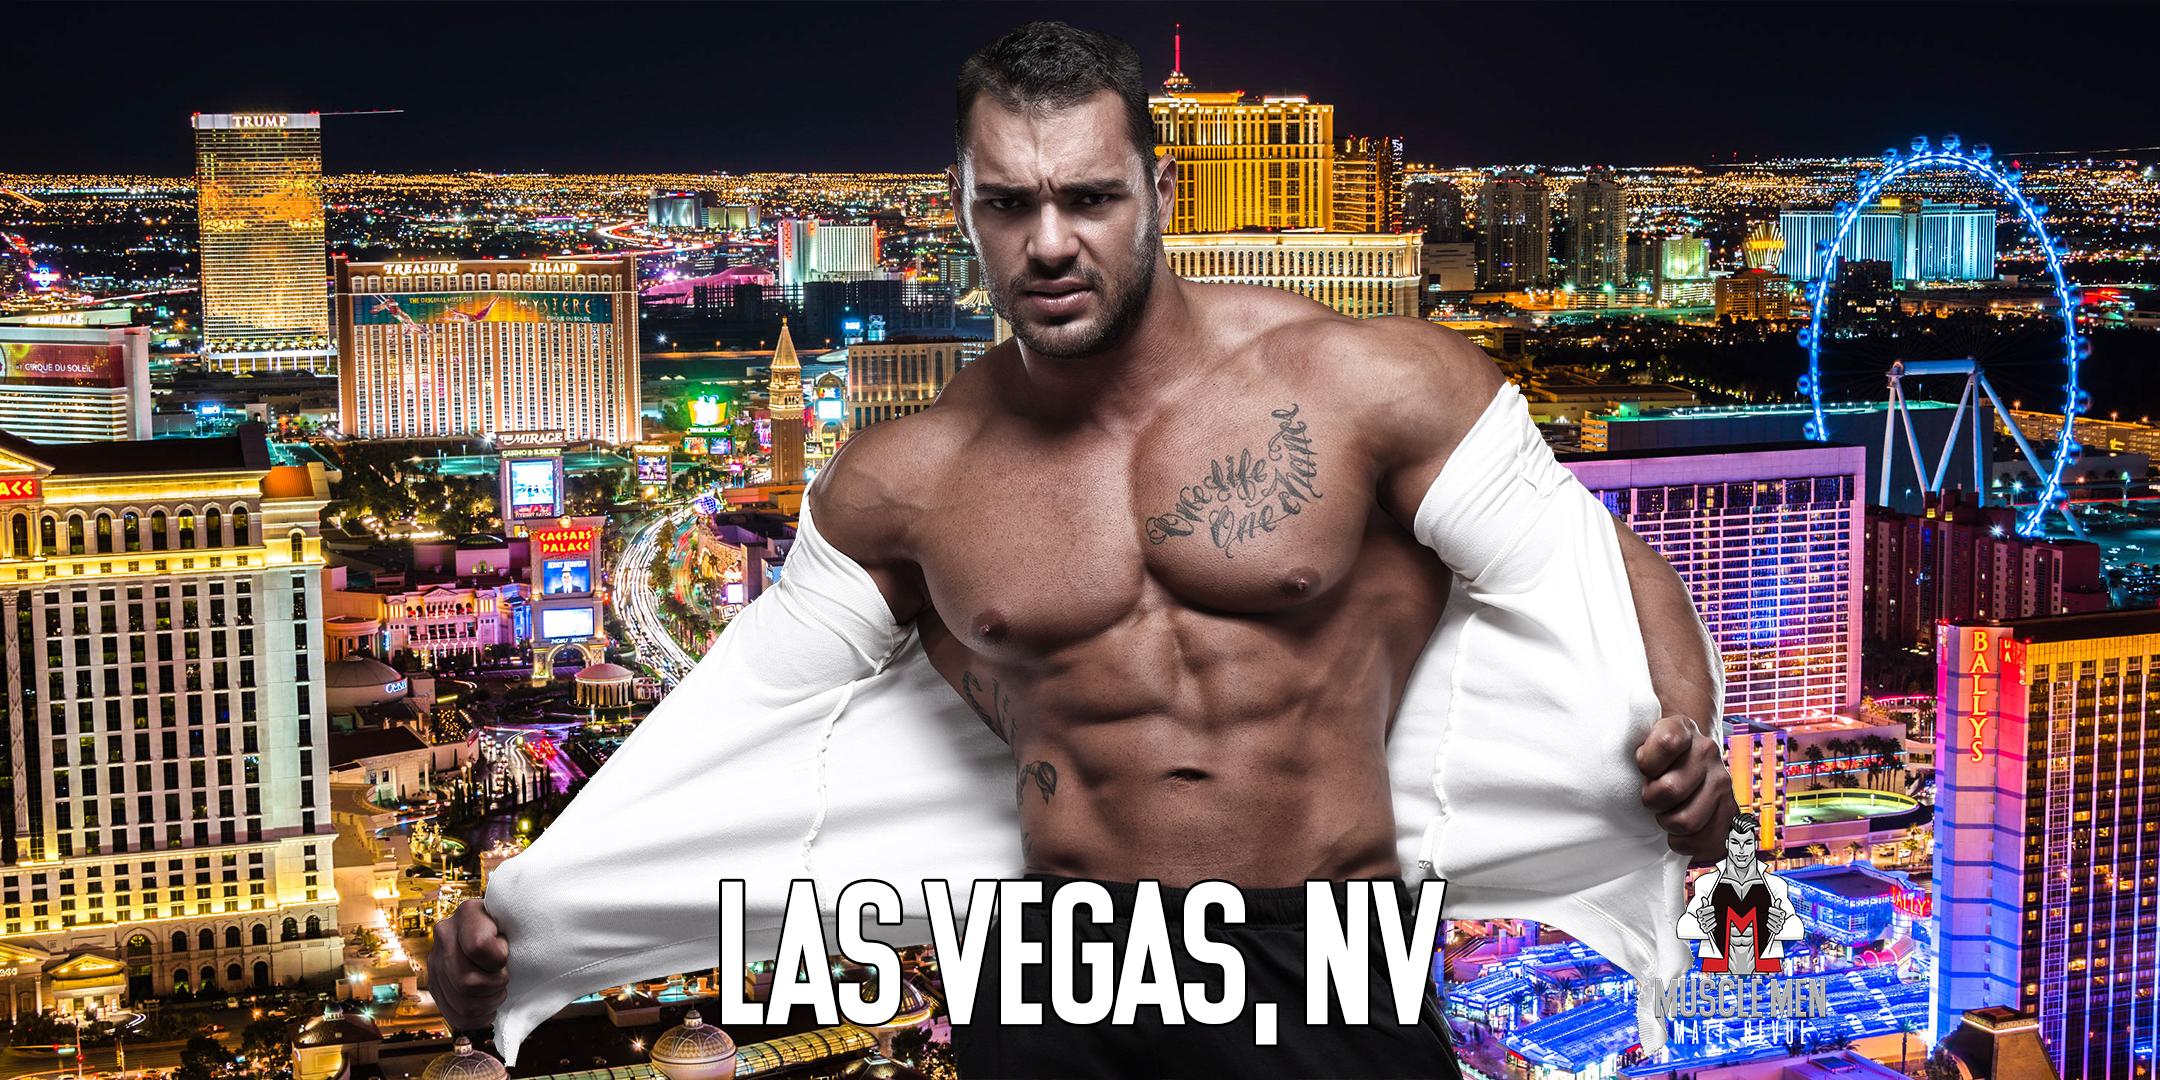 Muscle Men Male Strippers Revue & Male Strip Club Shows Las Vegas NV